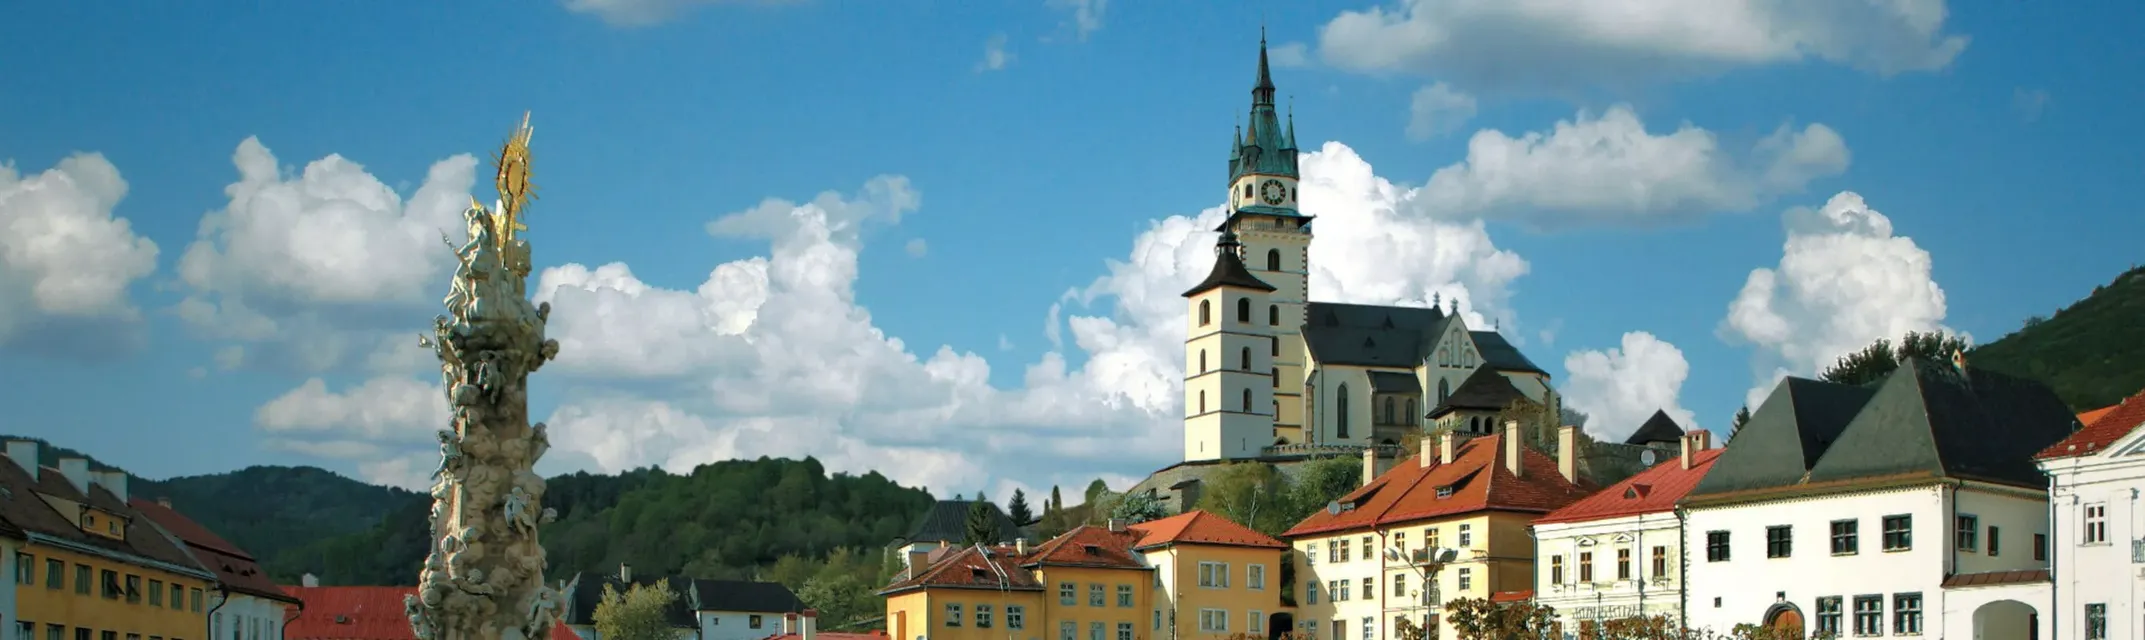 Kremnica | Banska Bystrica Region, Slovakia - Rated 3.8